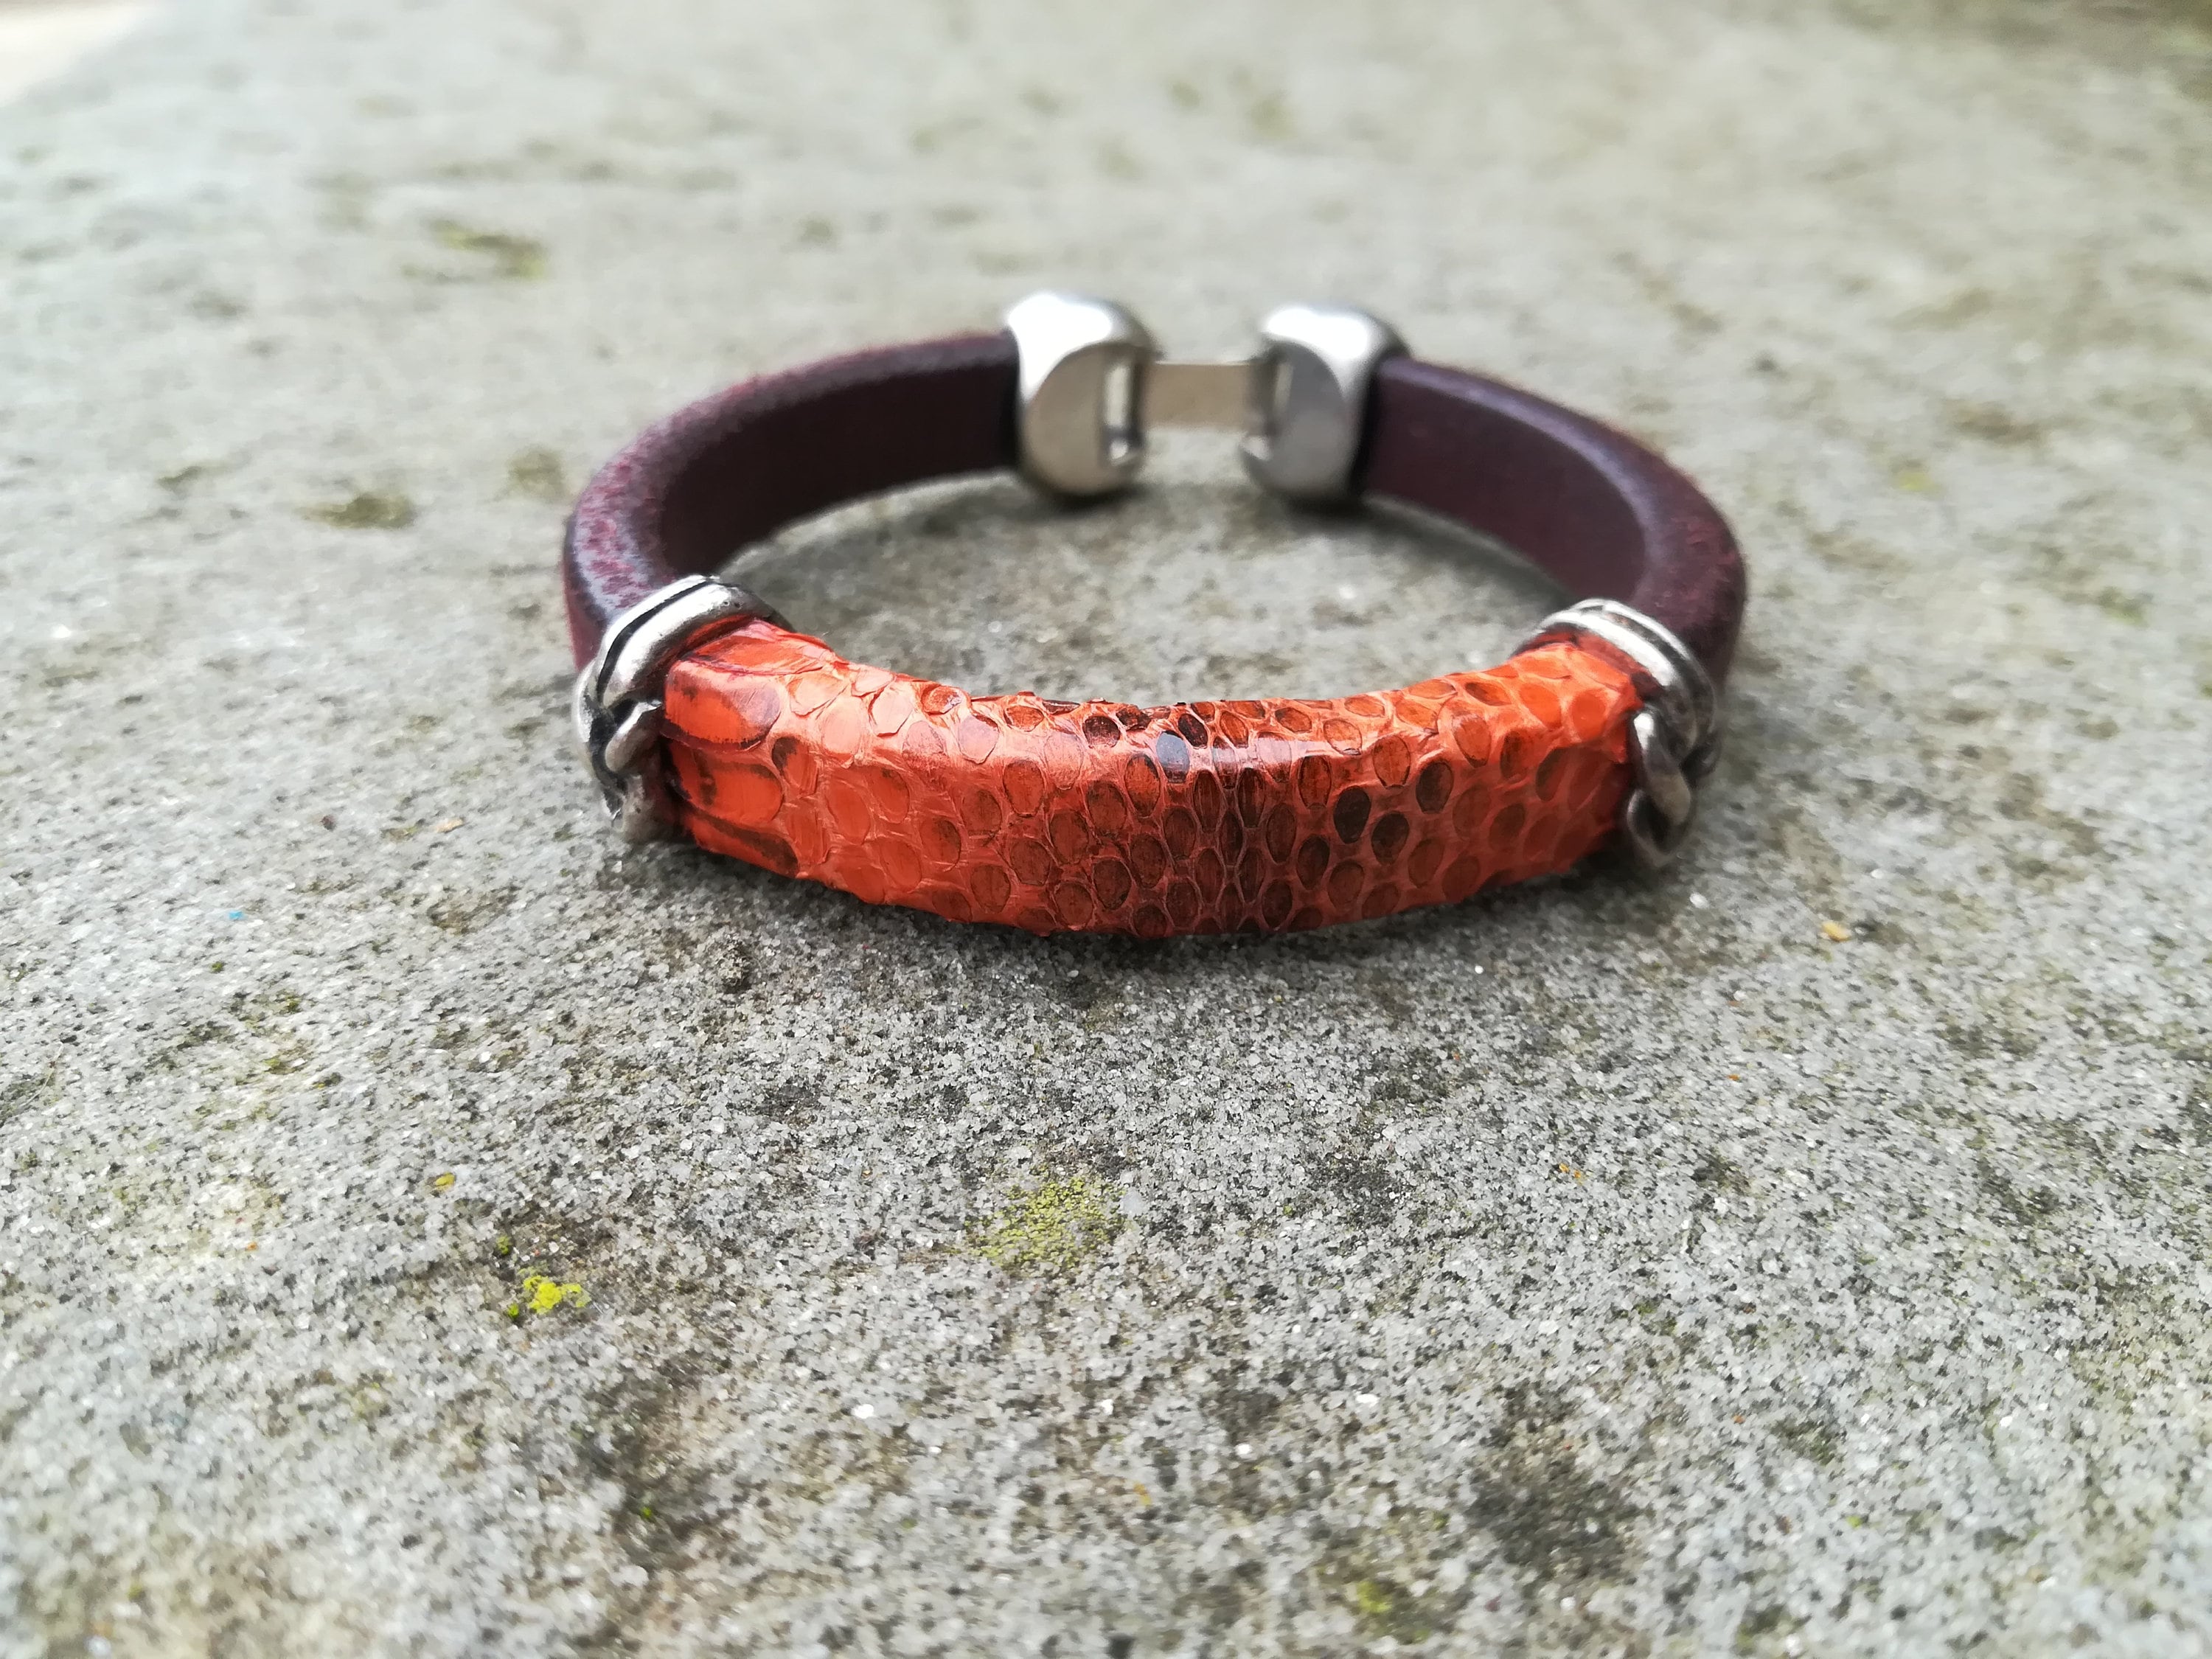 INMIND Handcrafted Jewellery Python Leather Bracelet